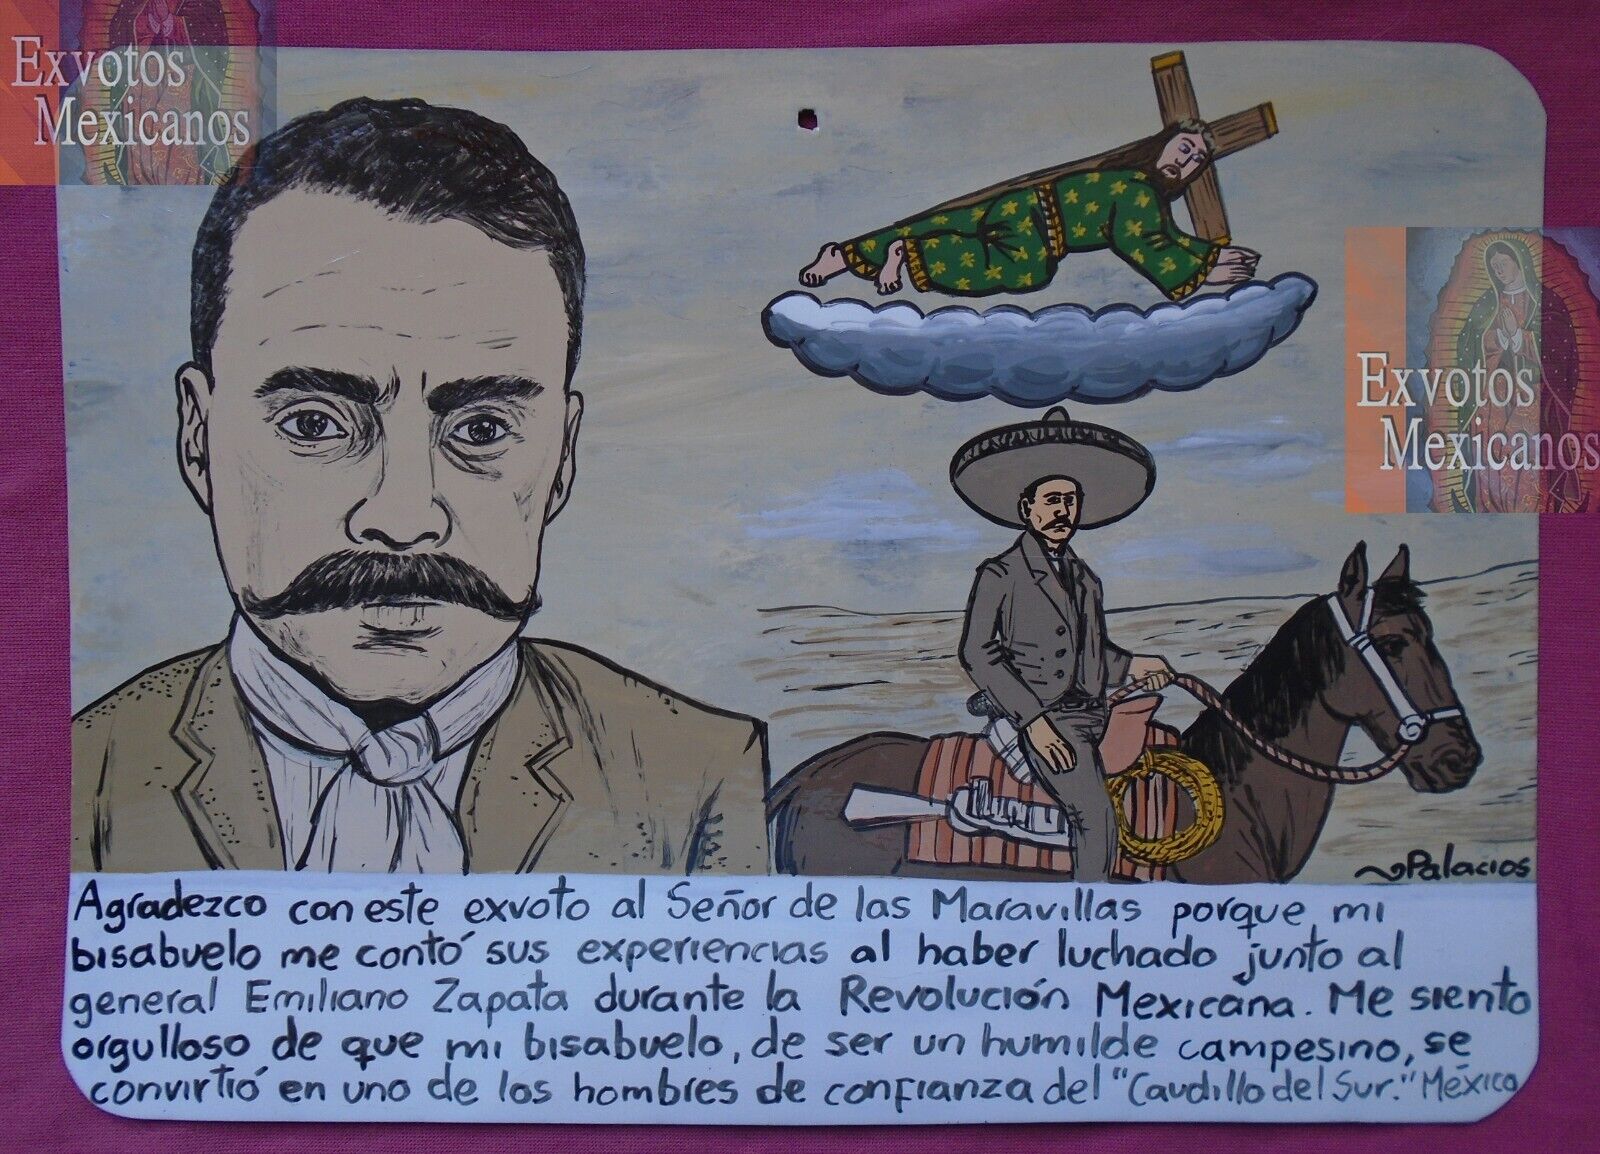 Exvoto man is grateful that his grandfather fought alongside Emiliano Zapata